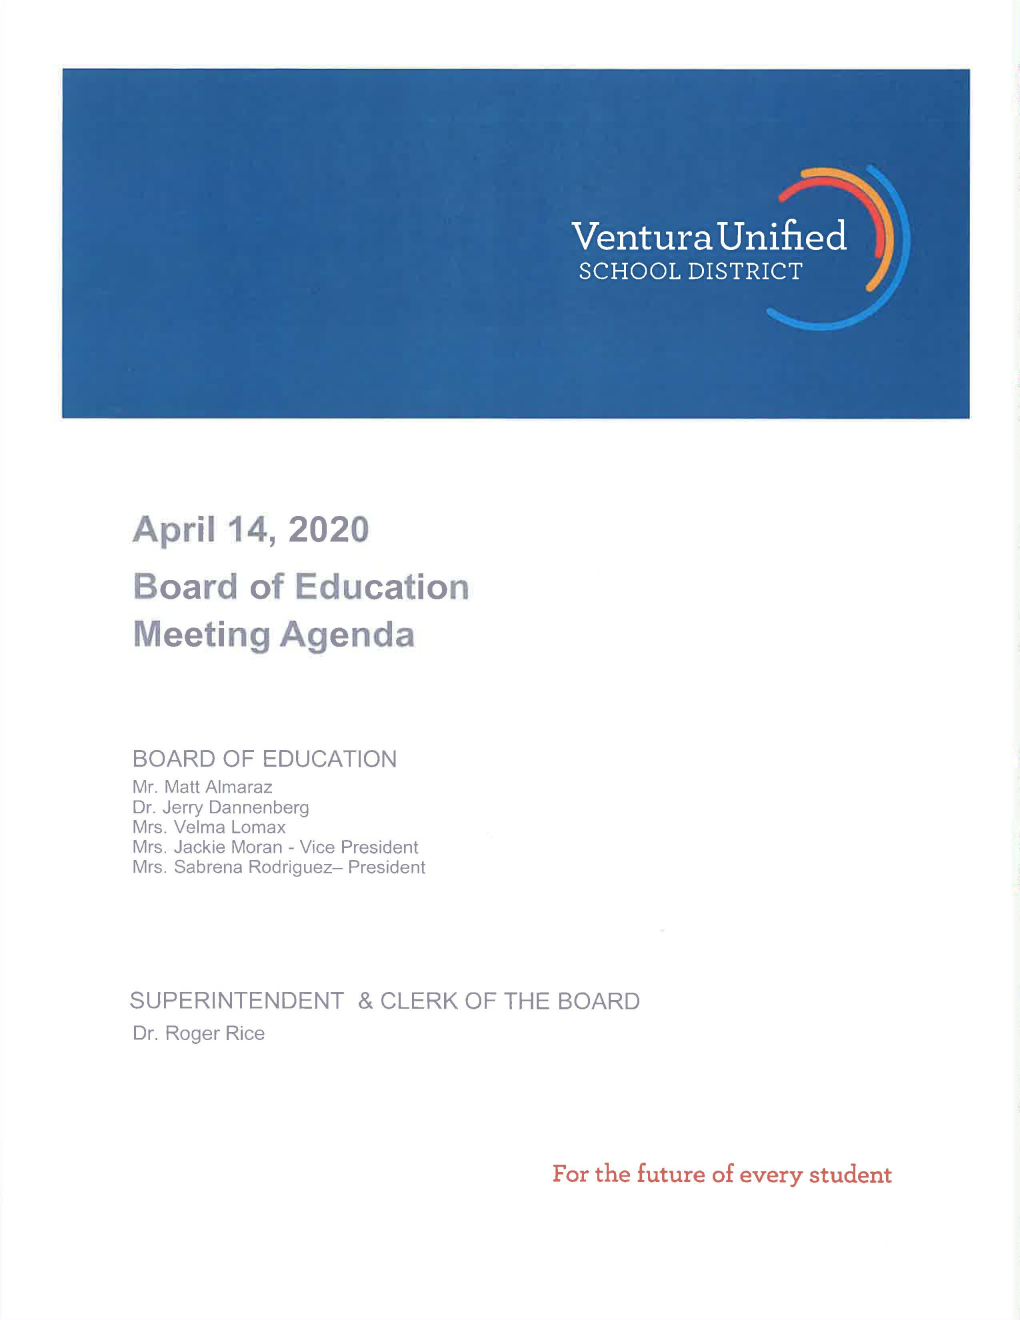 Apri I 14, 2020 Board of Education Meeting Agenda